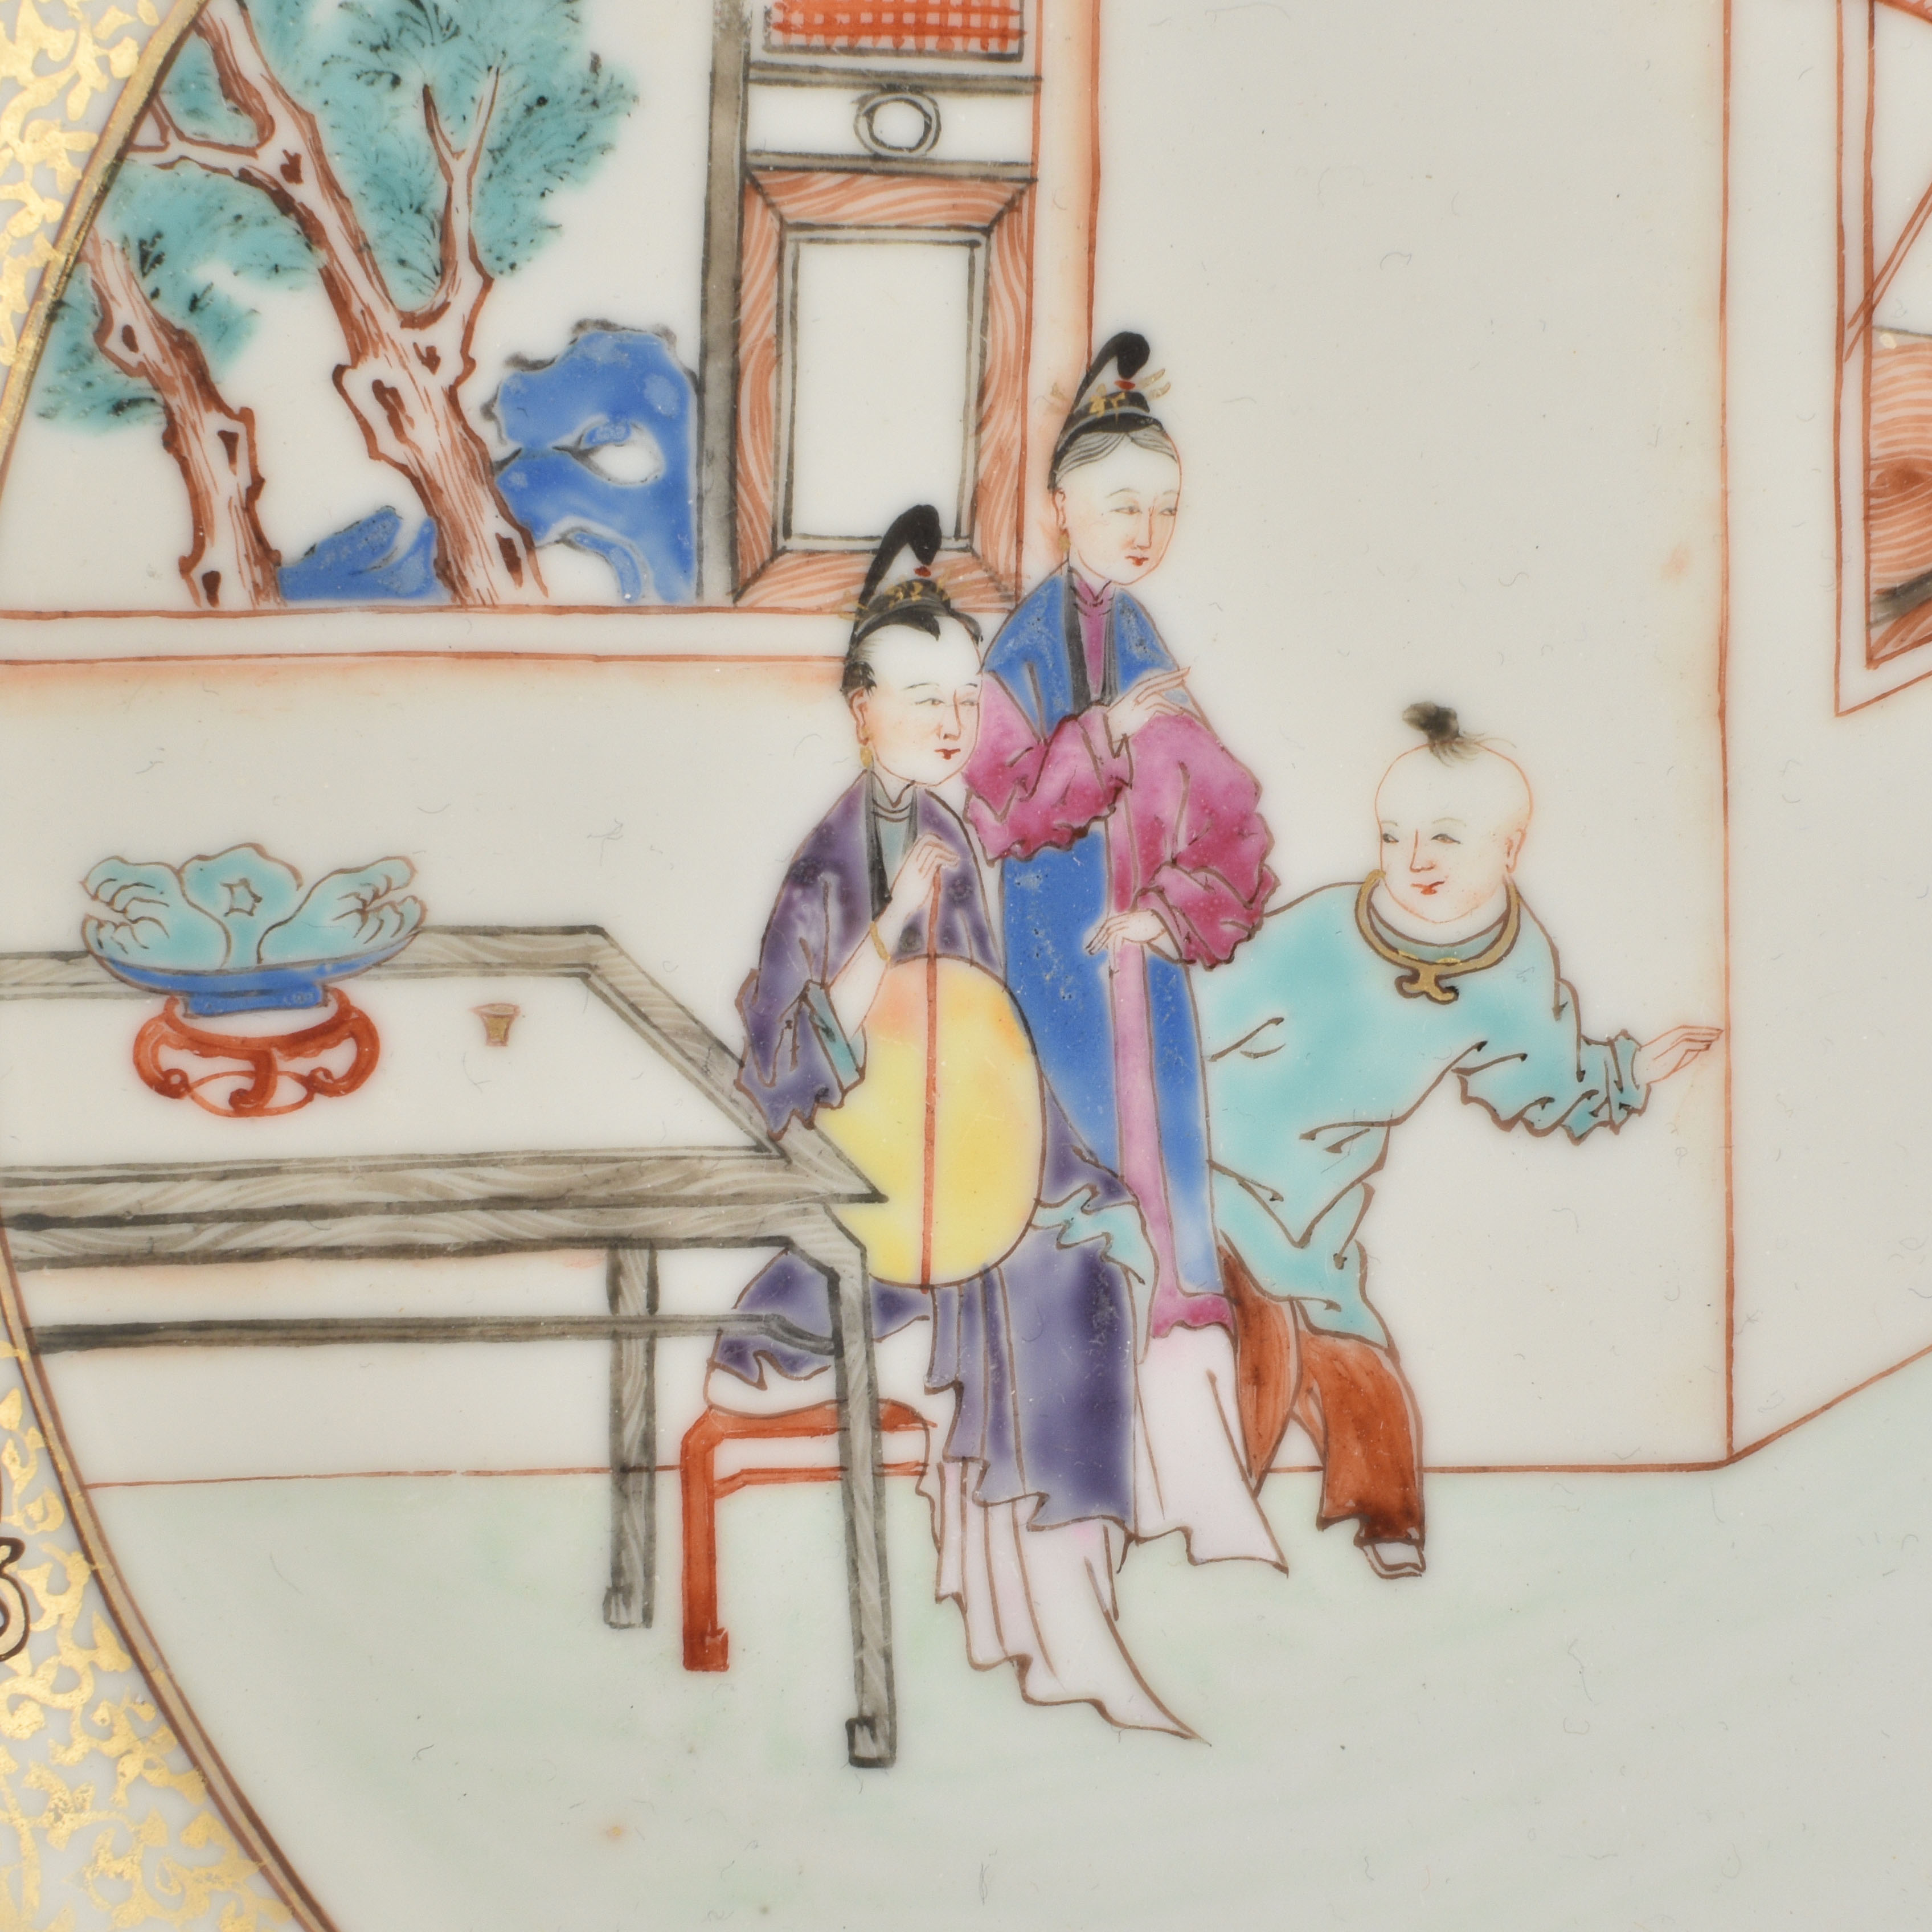 Porcelaine Qianlong (1735-1795), circa 1750/1760, Chine